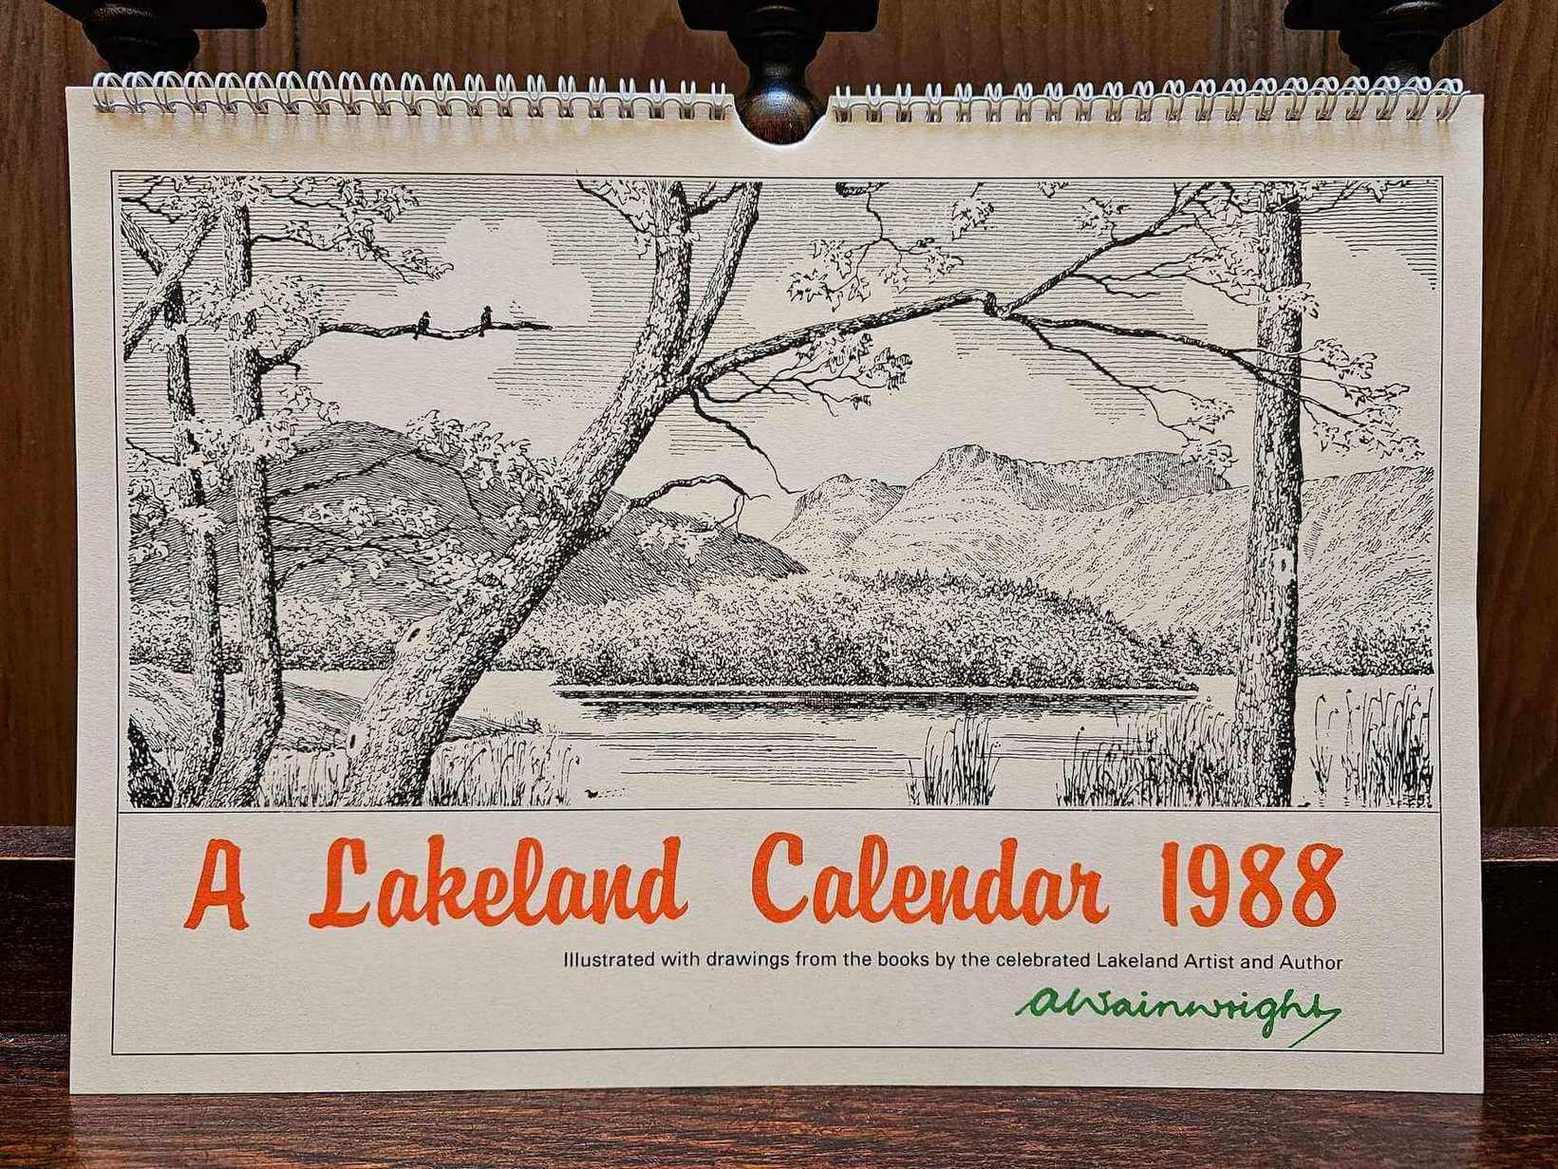 Wainwright Calendars and Diaries